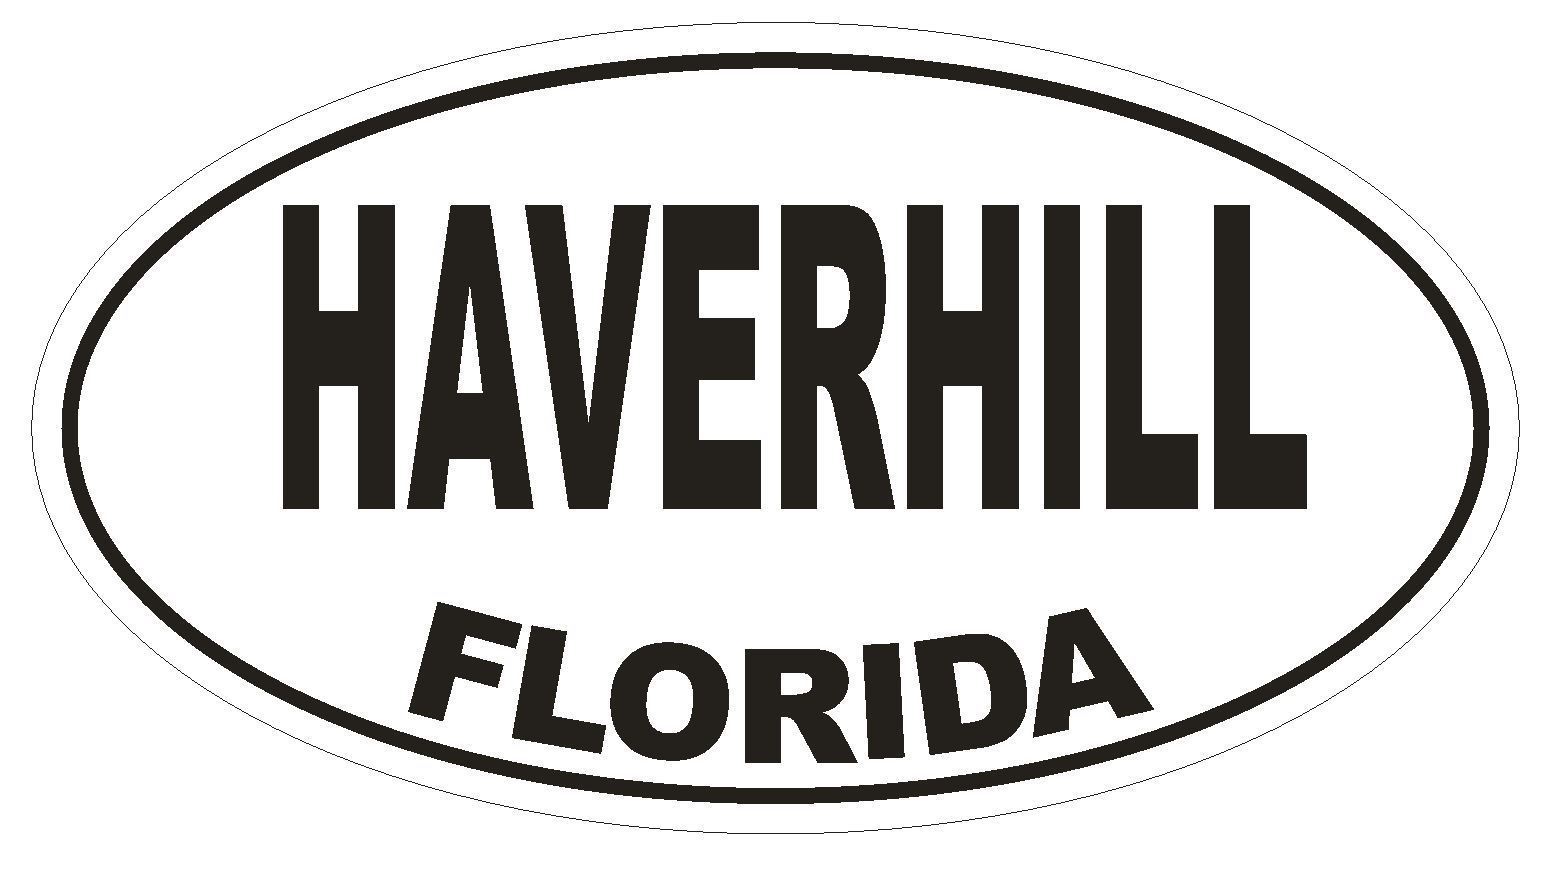 Haverhill Florida Oval Bumper Sticker or Helmet Sticker D1530 Euro Oval - $1.39 - $75.00